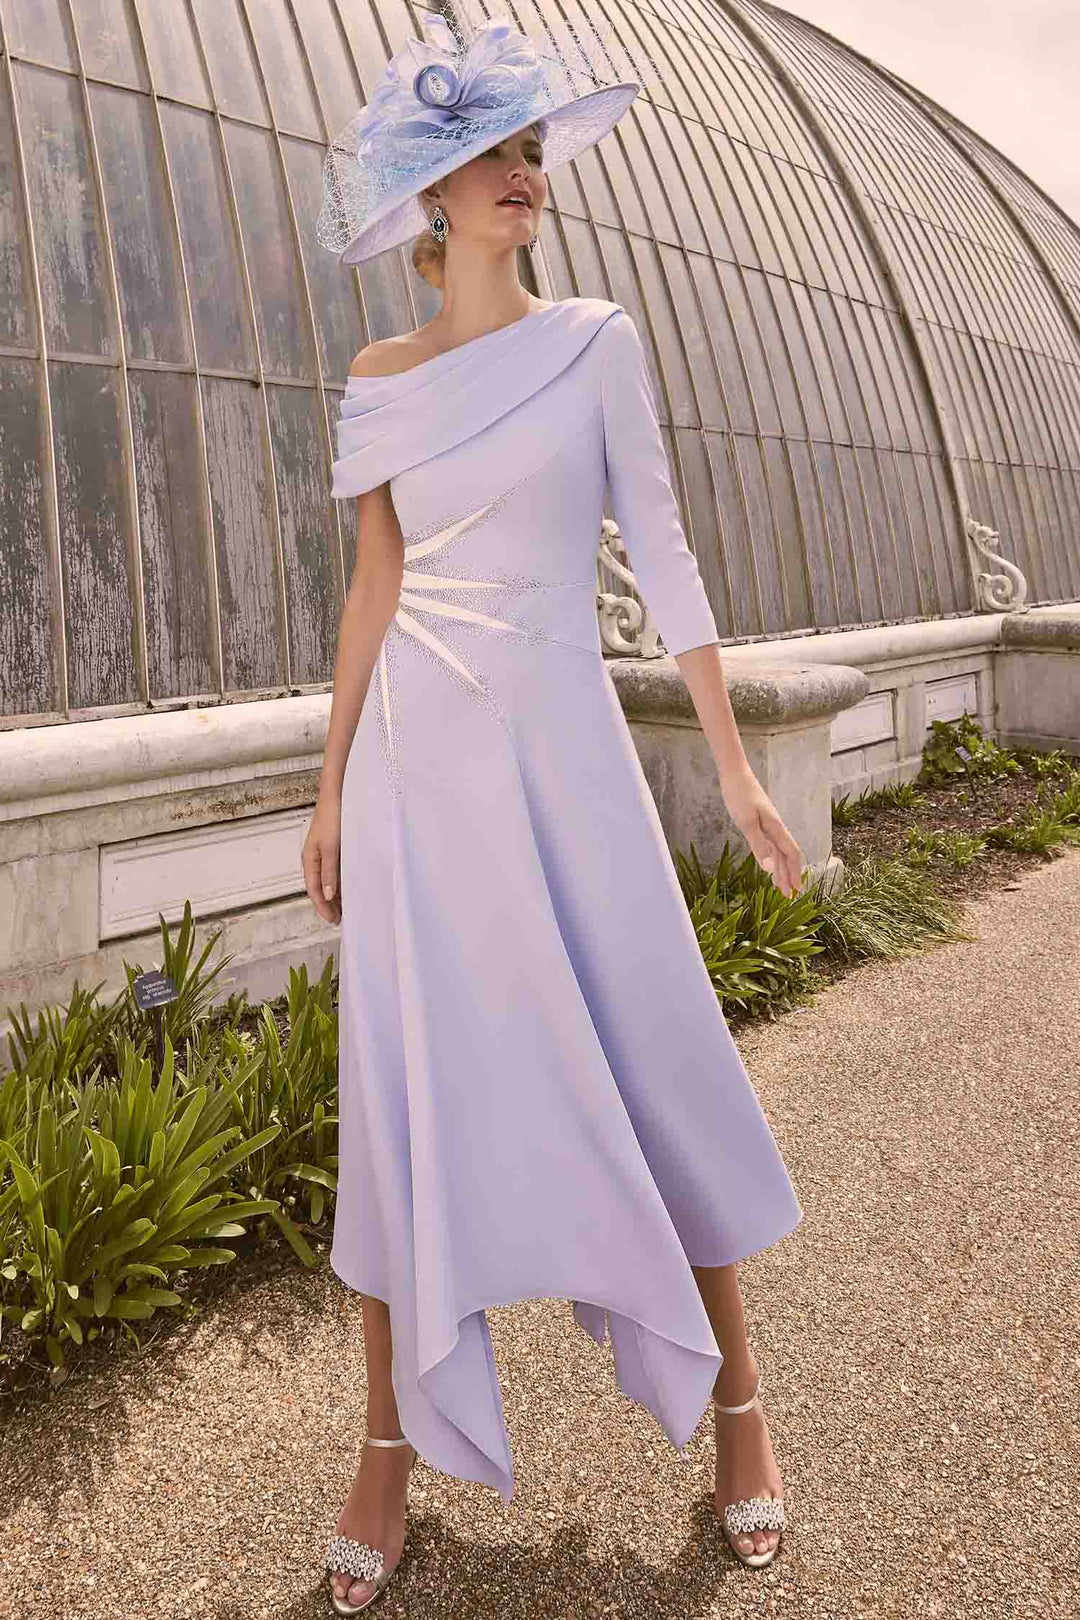 Veni Infantino 992238 Pale Blue/Ivory Dress